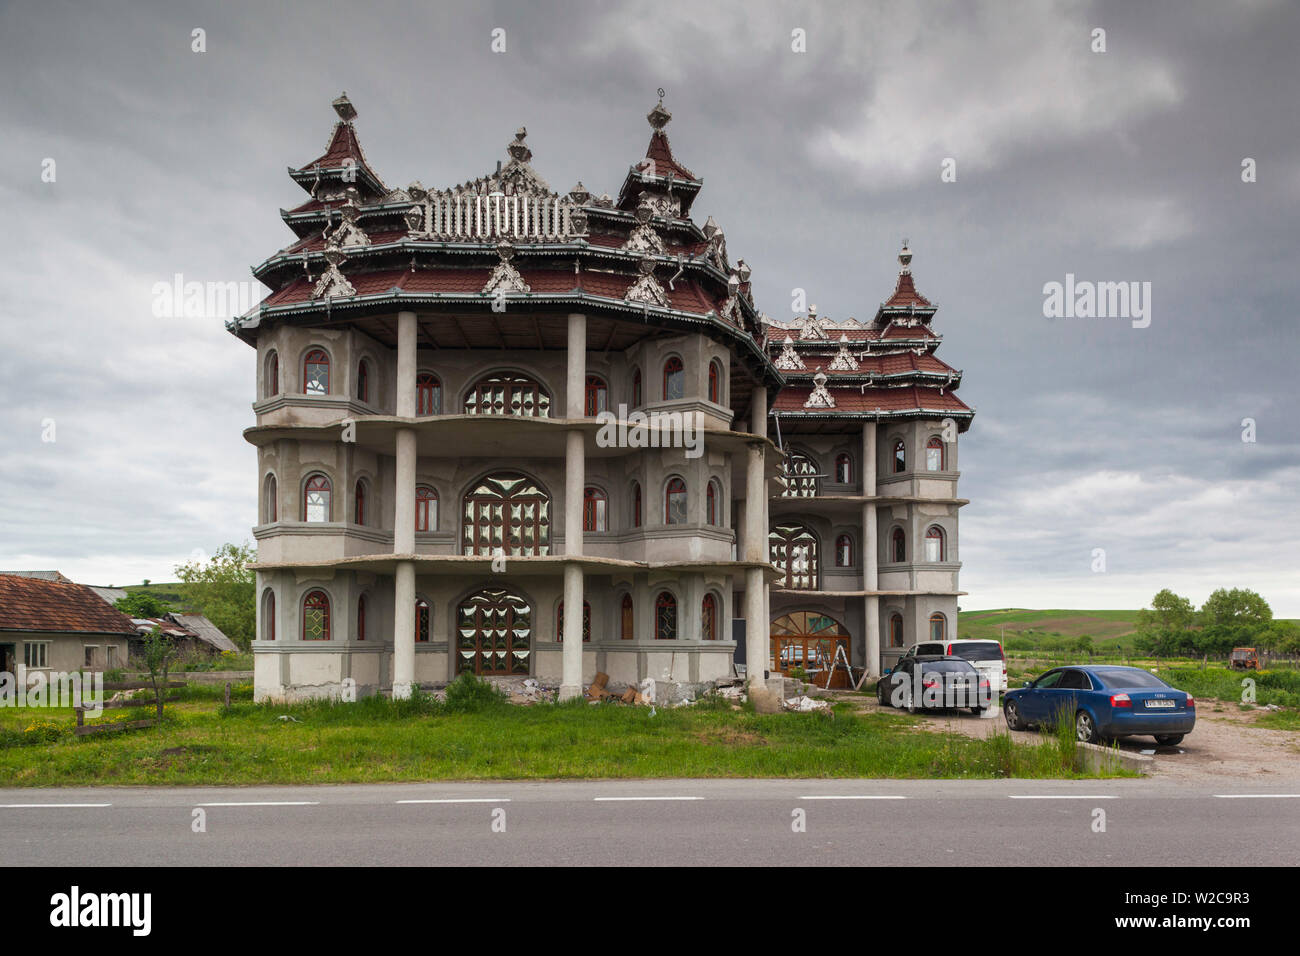 Romania, Transylvania, Huedin, Roma Palaces, large houses built by expatriate Roma families Stock Photo